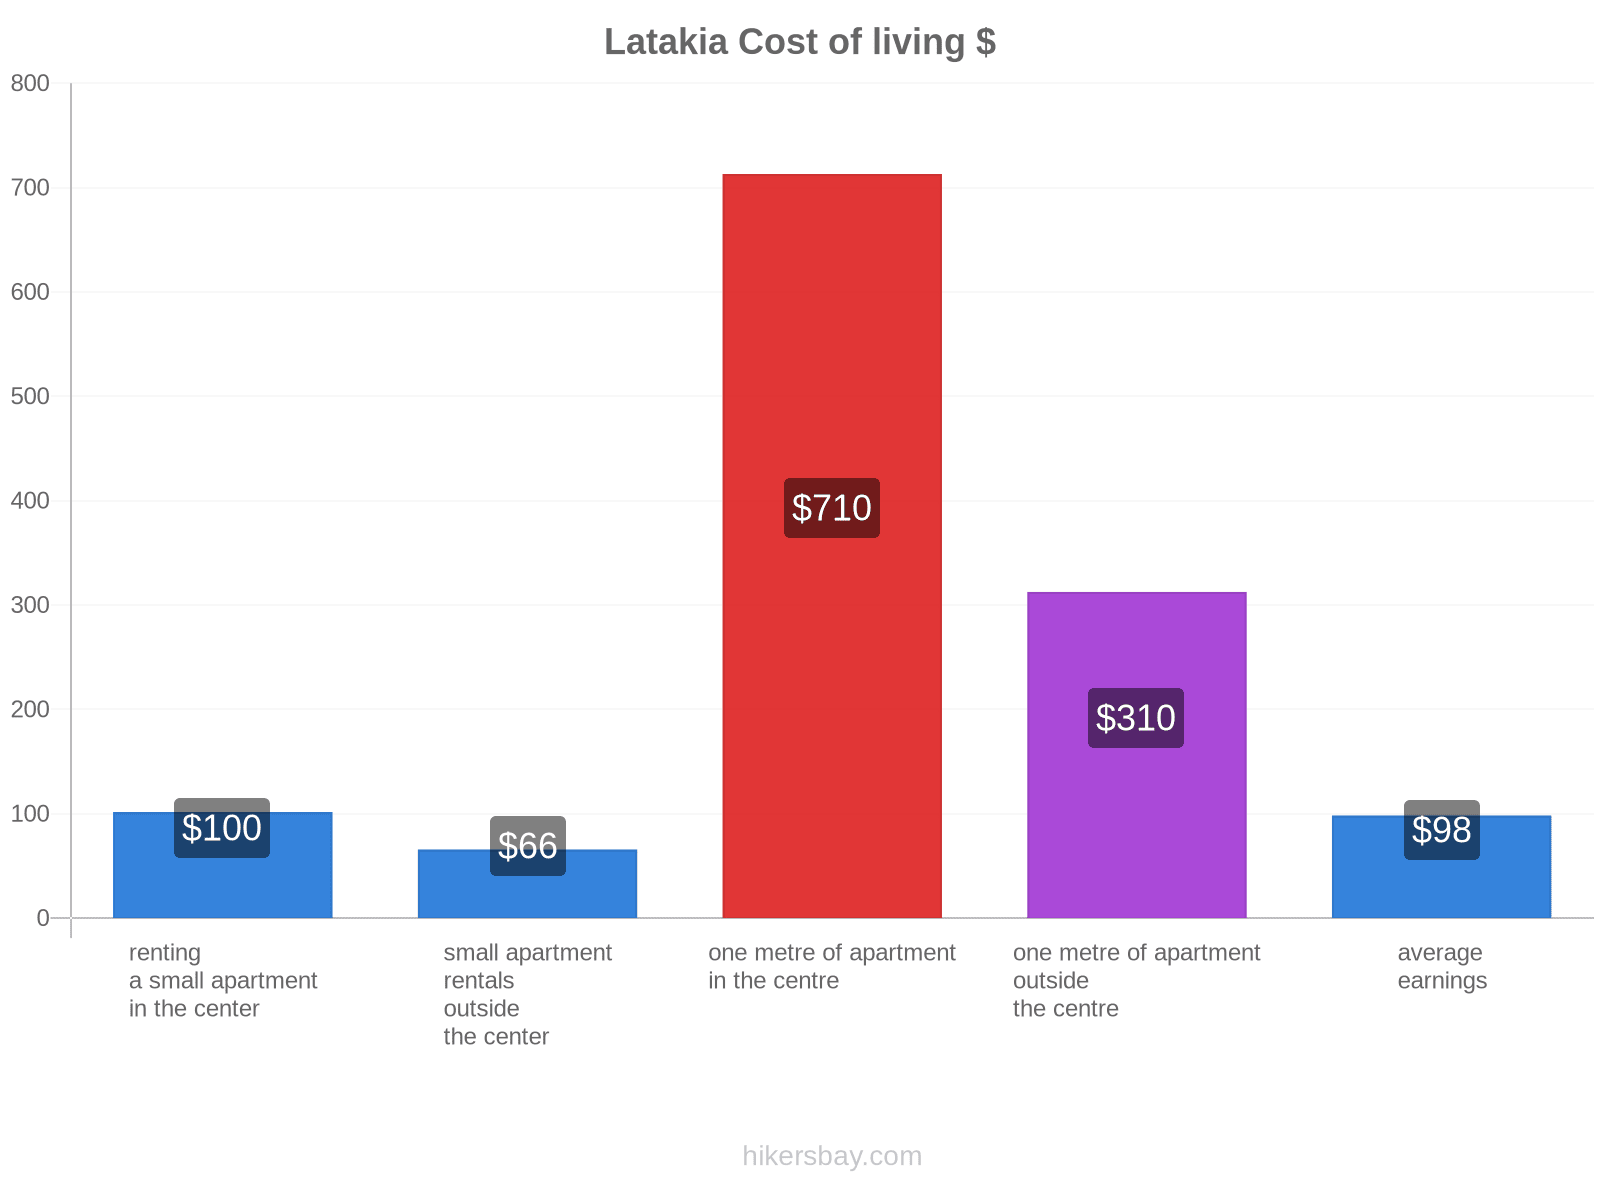 Latakia cost of living hikersbay.com